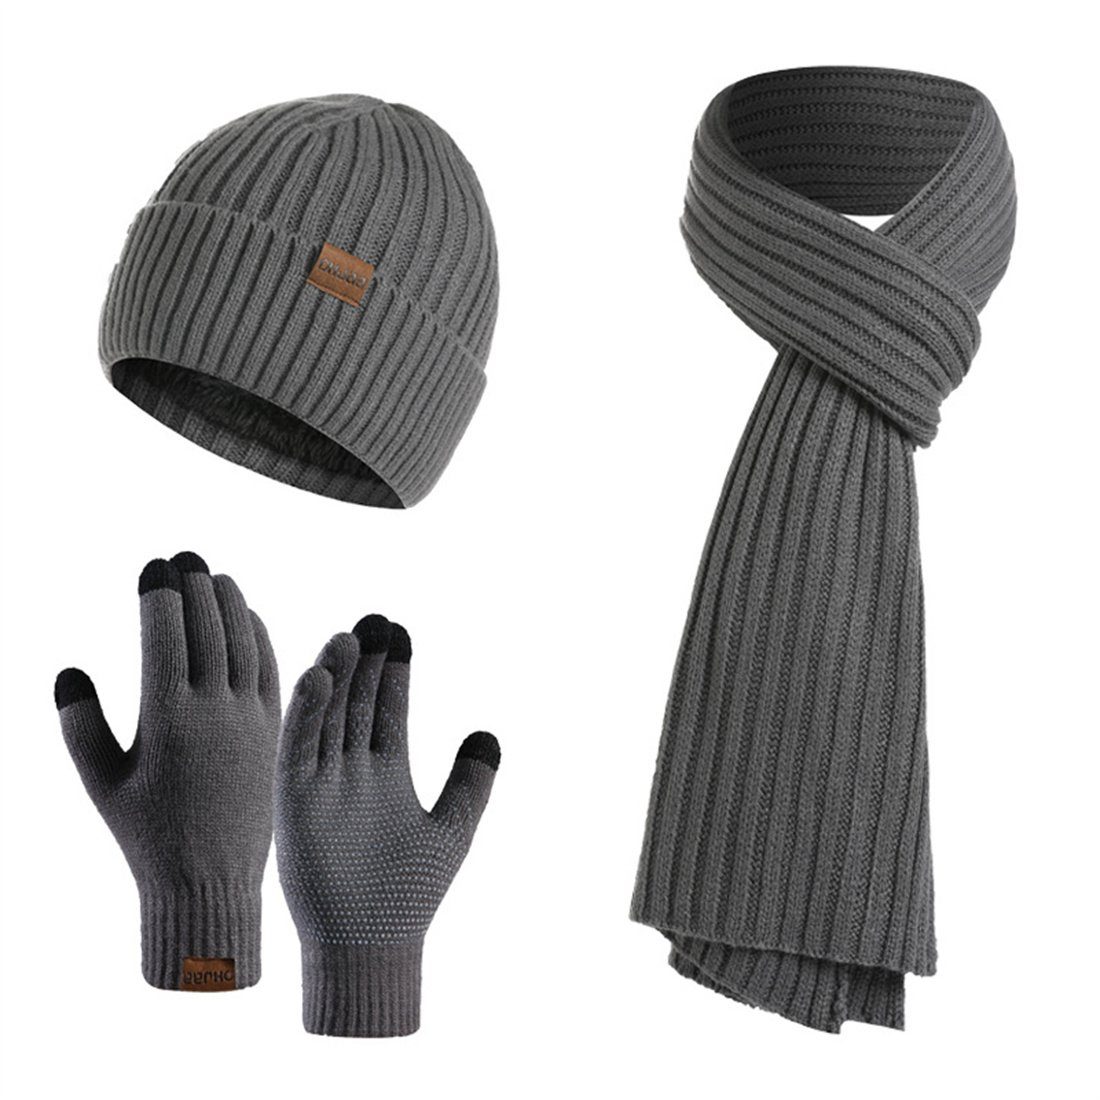 DÖRÖY Strickmütze Unisex Winter Strickmütze, Solid Farbe Hut Schal Handschuhe 3er Set dunkelgrau